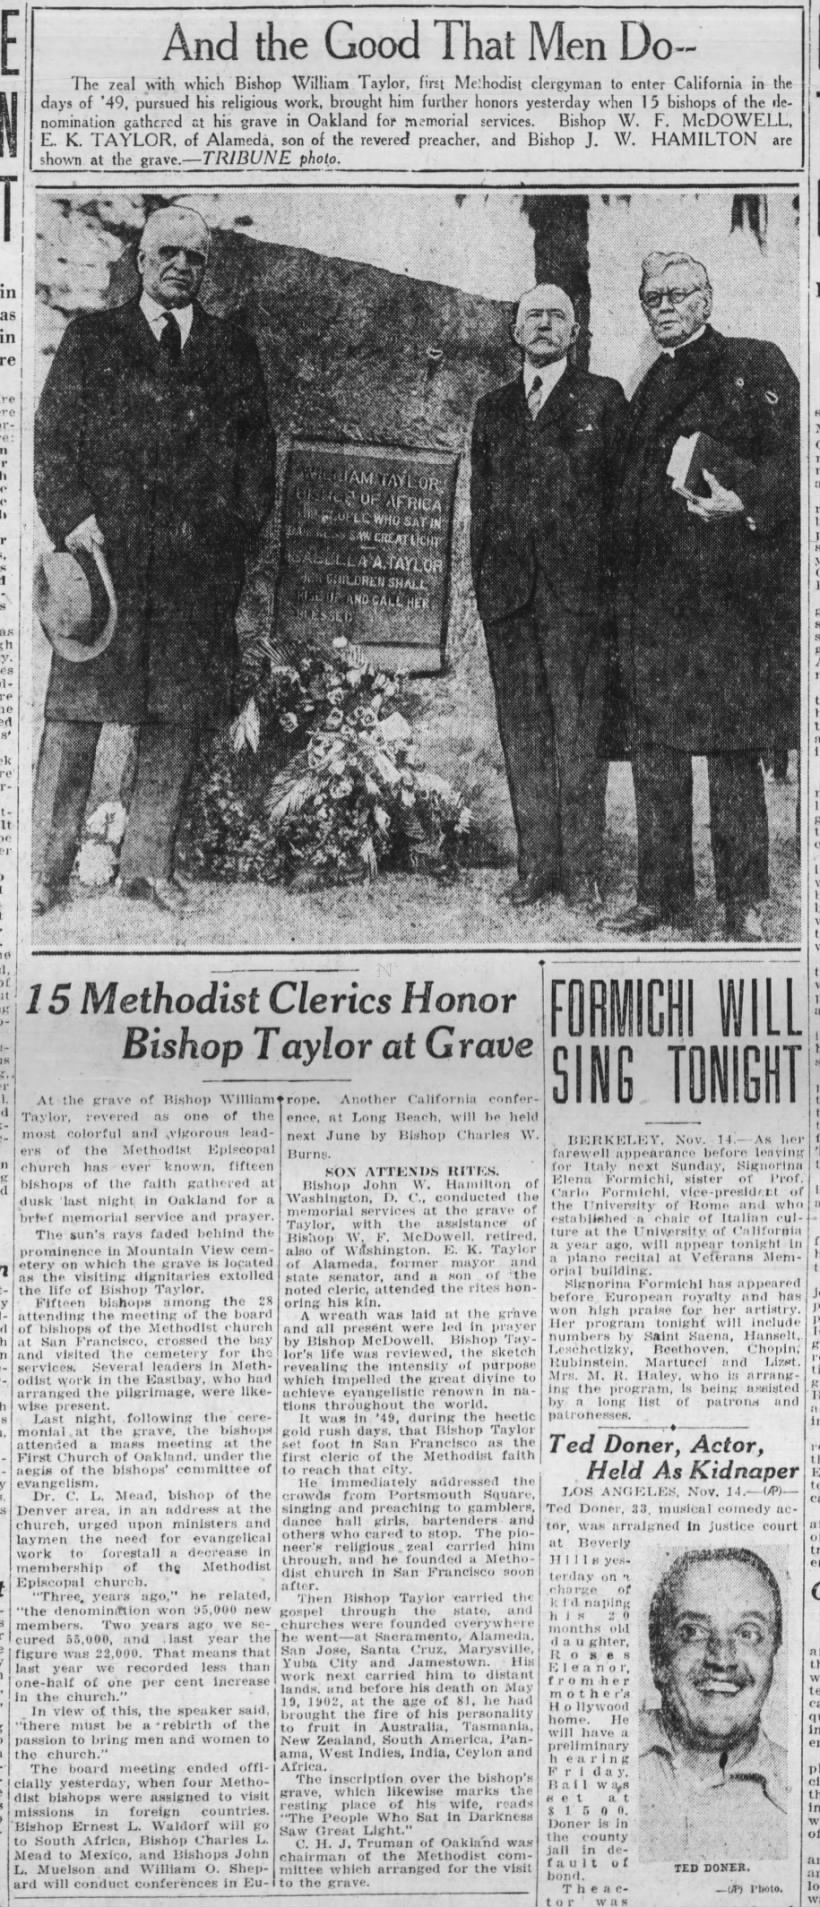 Methodists honor Bishop Taylor